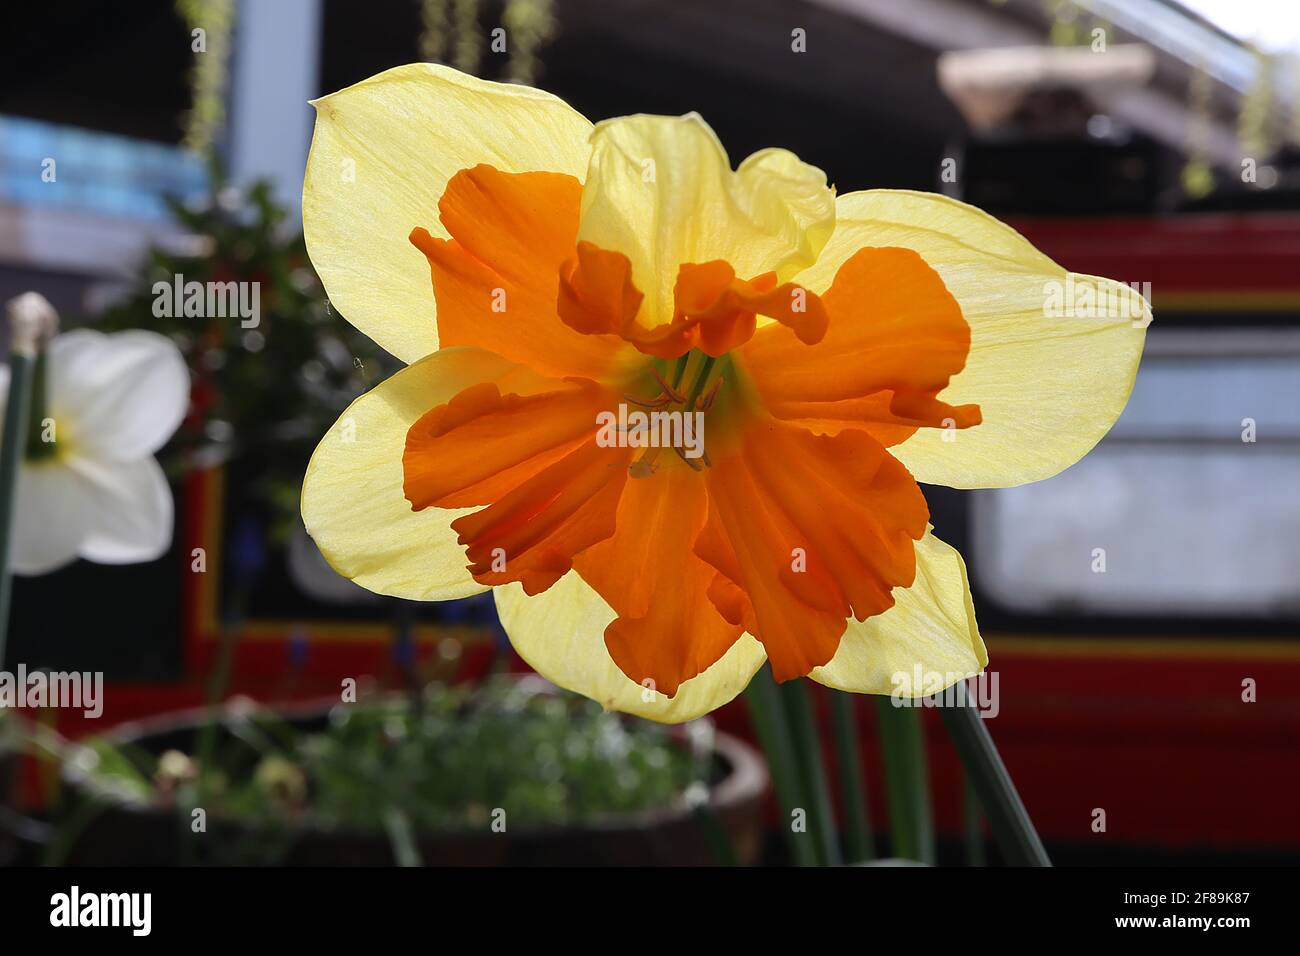 Narcissus / Daffodil 'Congress' Division 11a Diffodils de cuello de cúpula dividida, pétalos de limón amarillo y copa de naranja dividida, abril, Inglaterra, Reino Unido Foto de stock